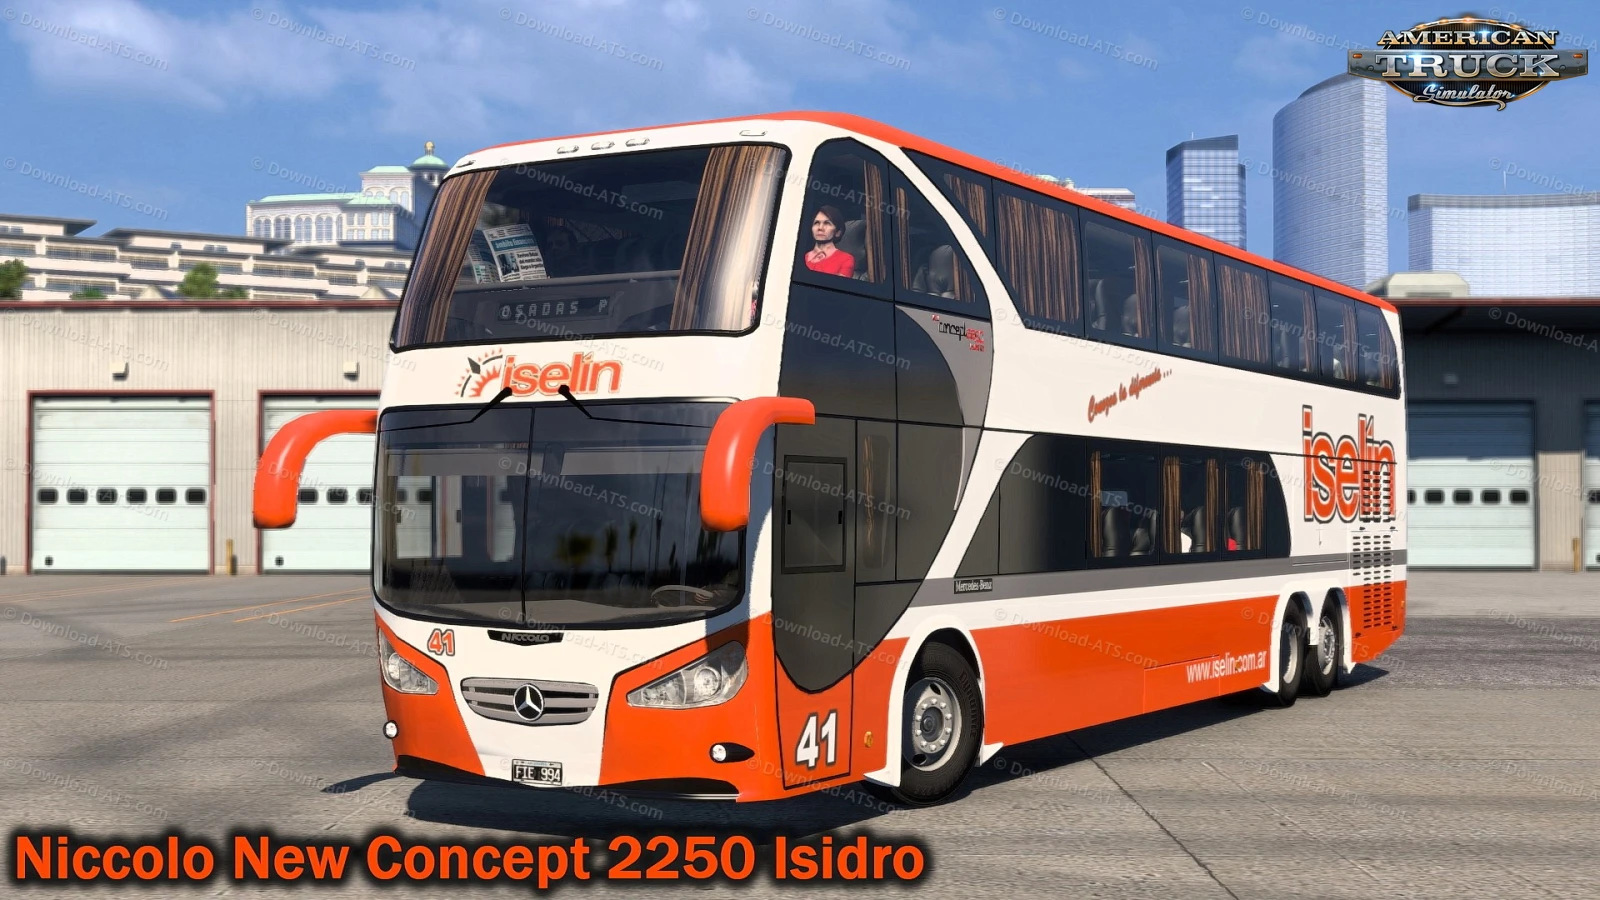 Niccolo New Concept 2250 Isidro Bus v1.3 (1.49.x) for ATS